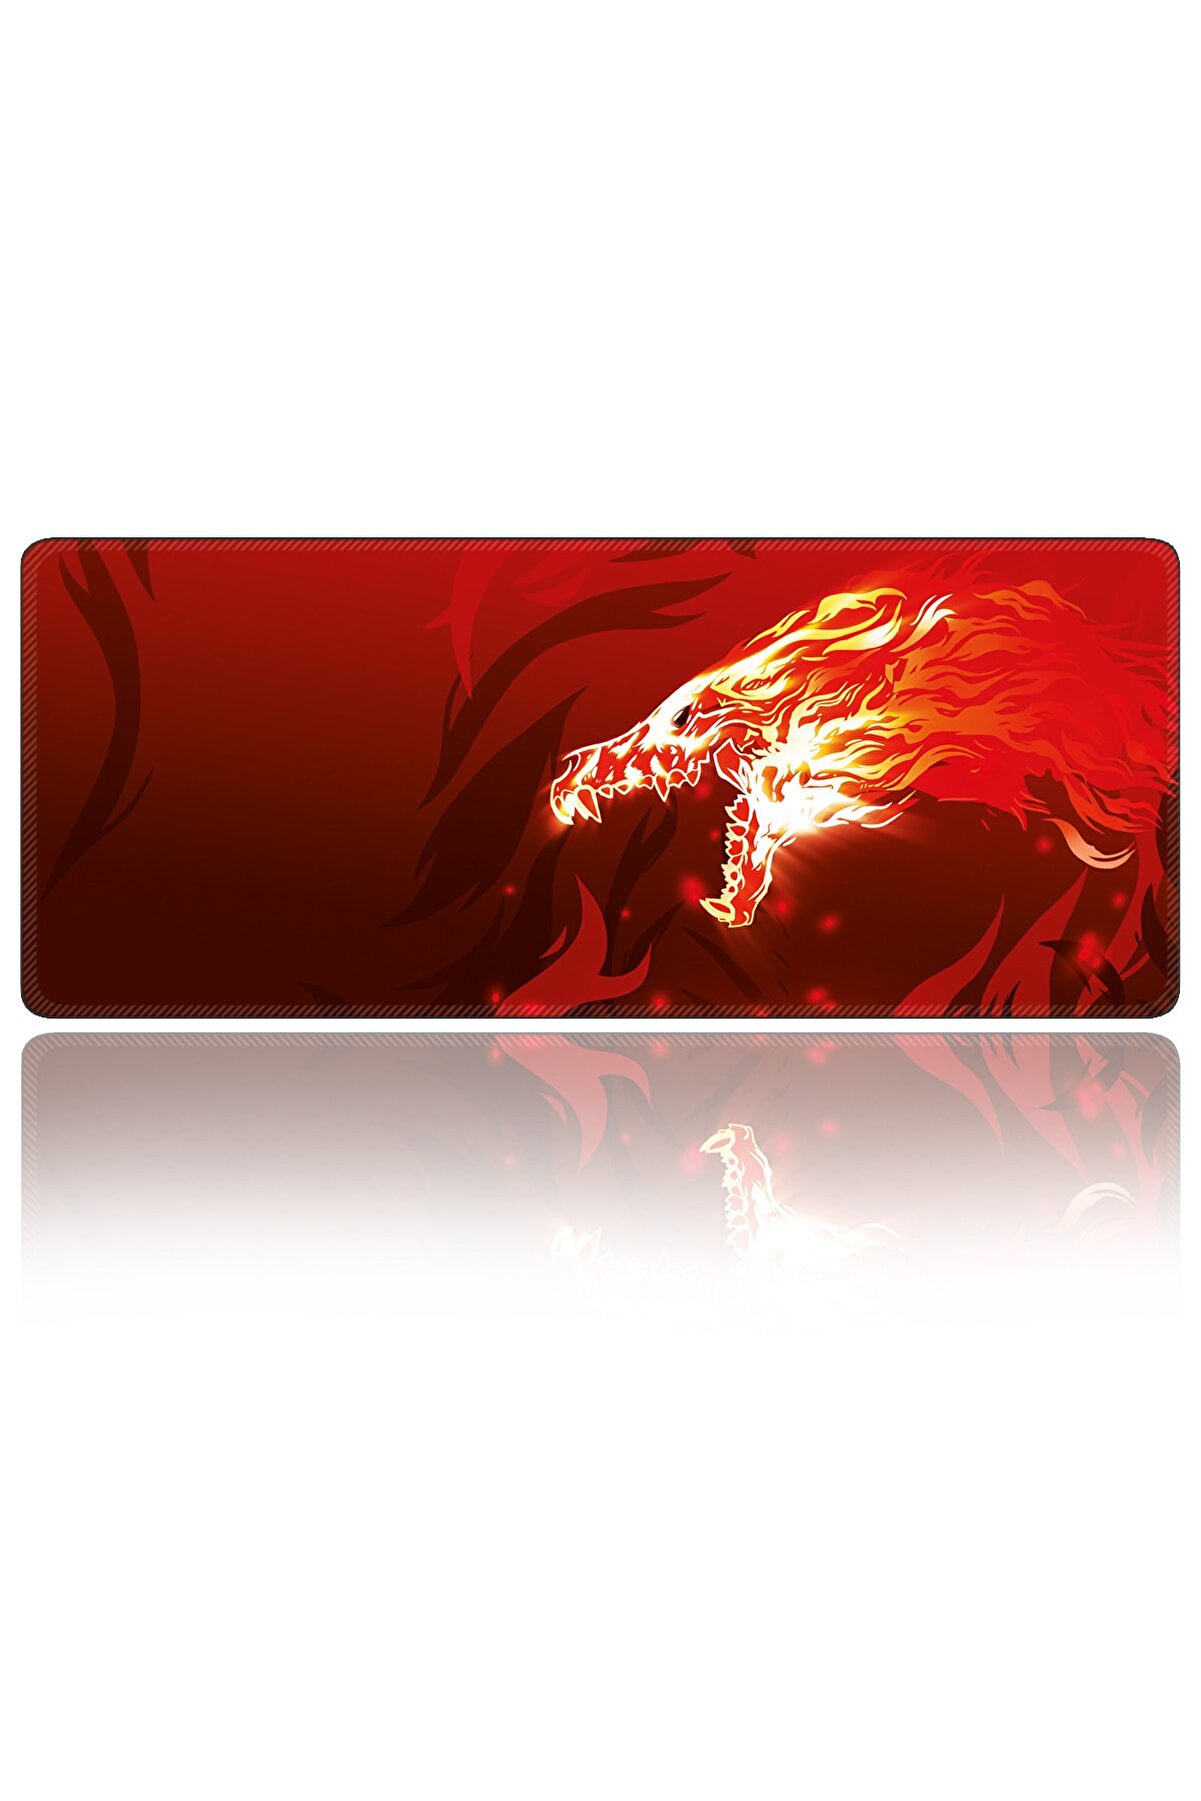 Xrades Red Dragon 90x40 Cm Xxl Gamings Oyuncu Mousepad